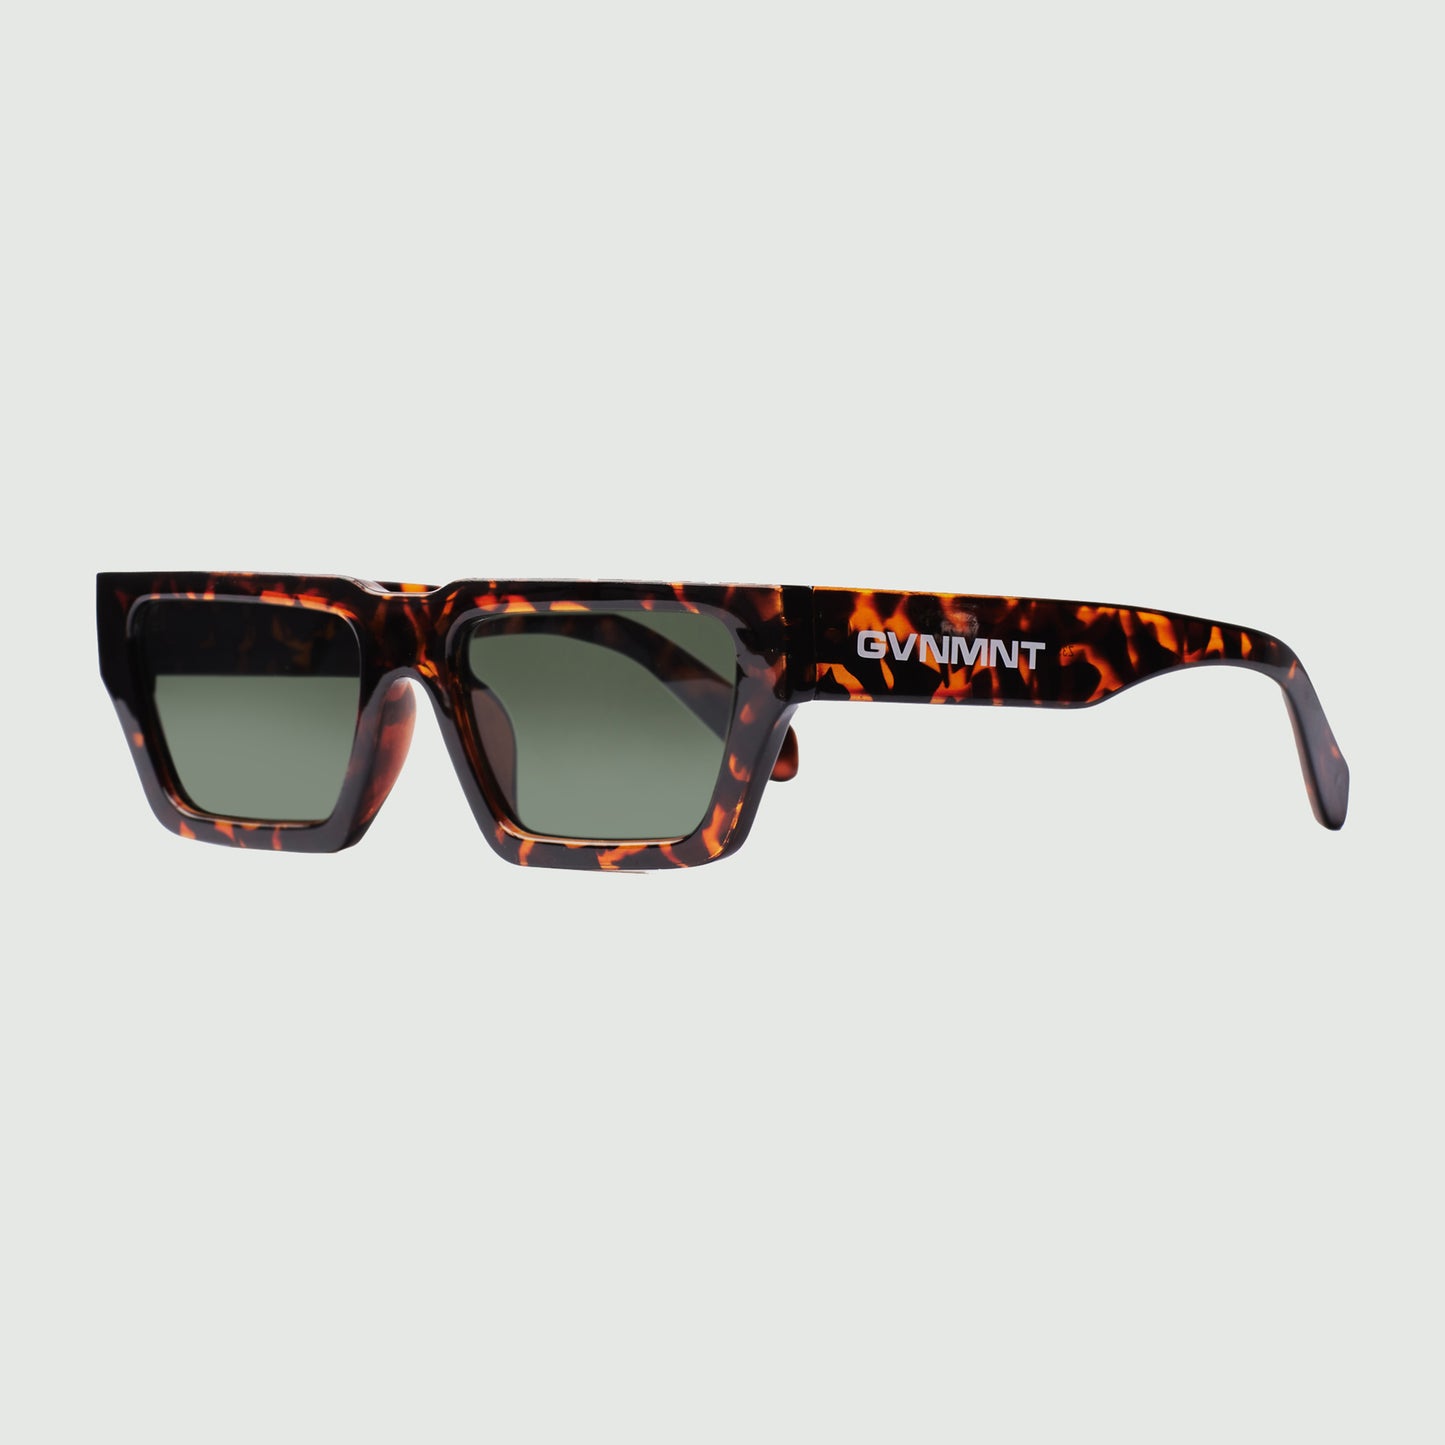 Quad Sunglasses - Tortoise shell - GVNMNT Clothing Co', European streetwear.